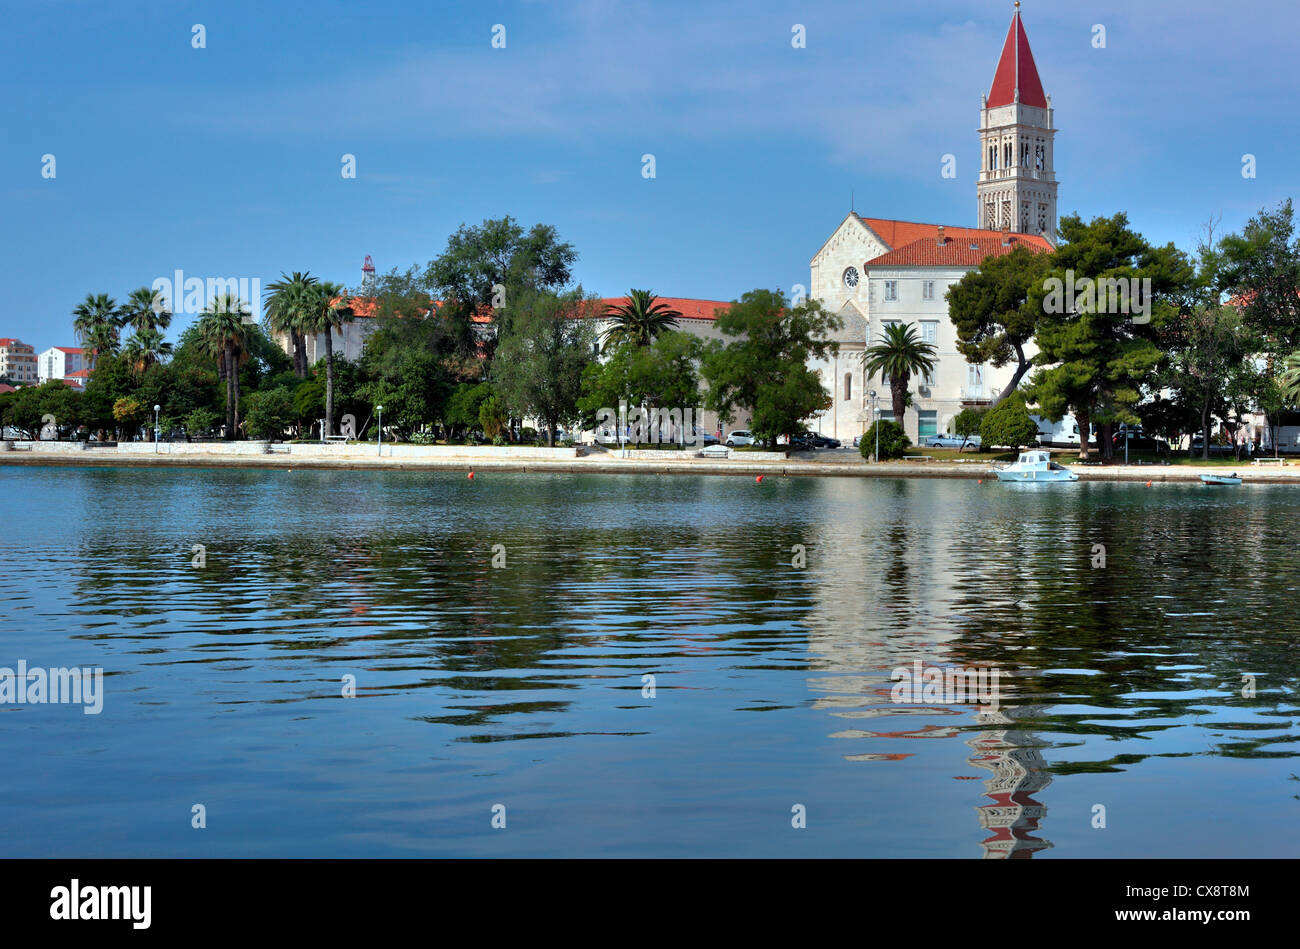 Cathedral of St. Lawrence, Trogir, Dalmatia, Croatia Stock Photo